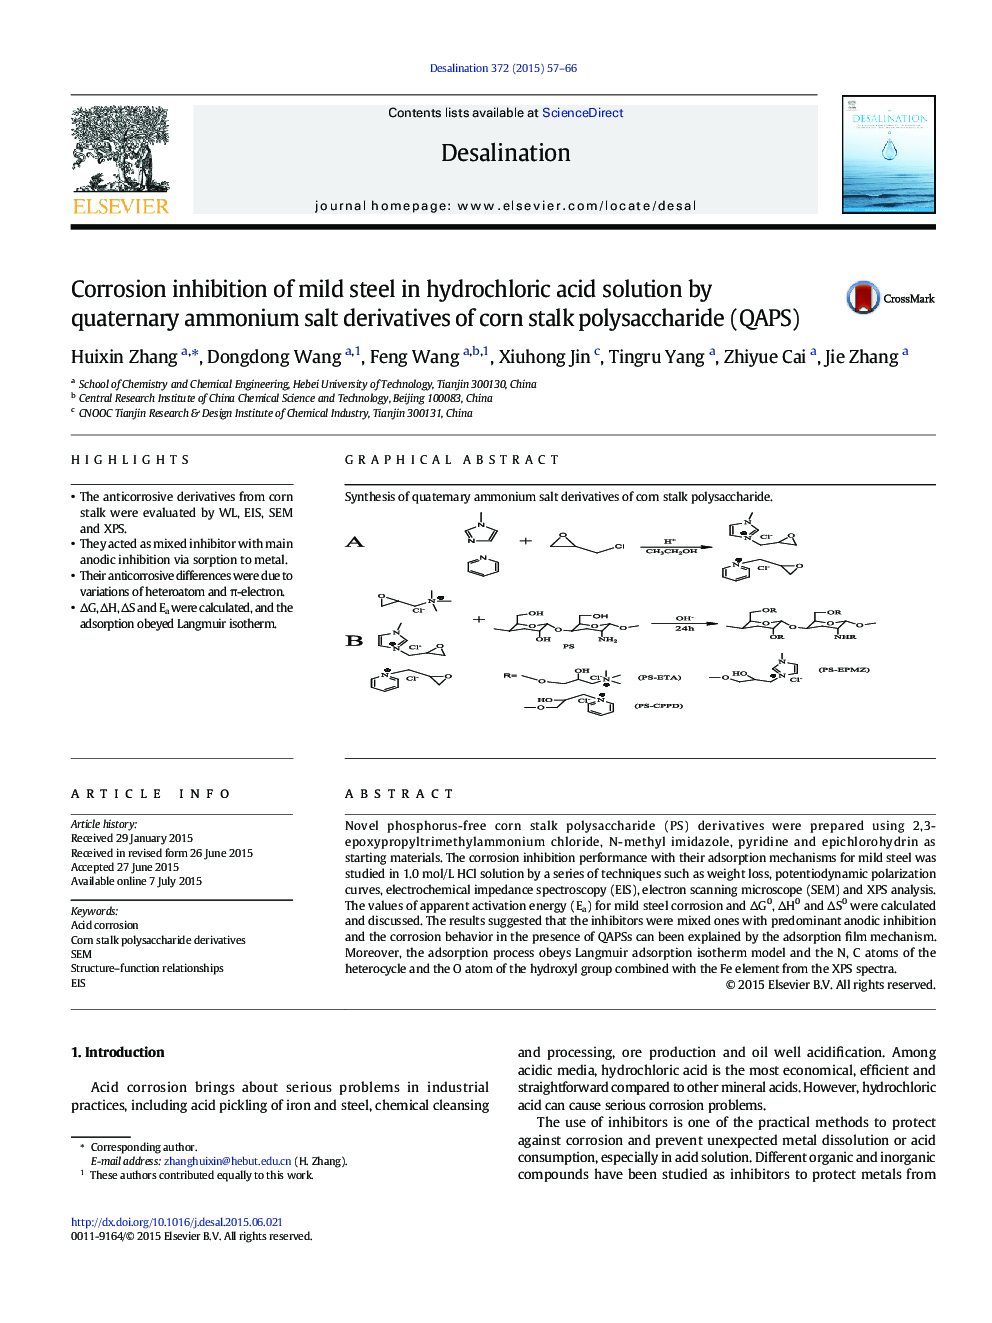 Corrosion inhibition of mild steel in hydrochloric acid solution by quaternary ammonium salt derivatives of corn stalk polysaccharide (QAPS)